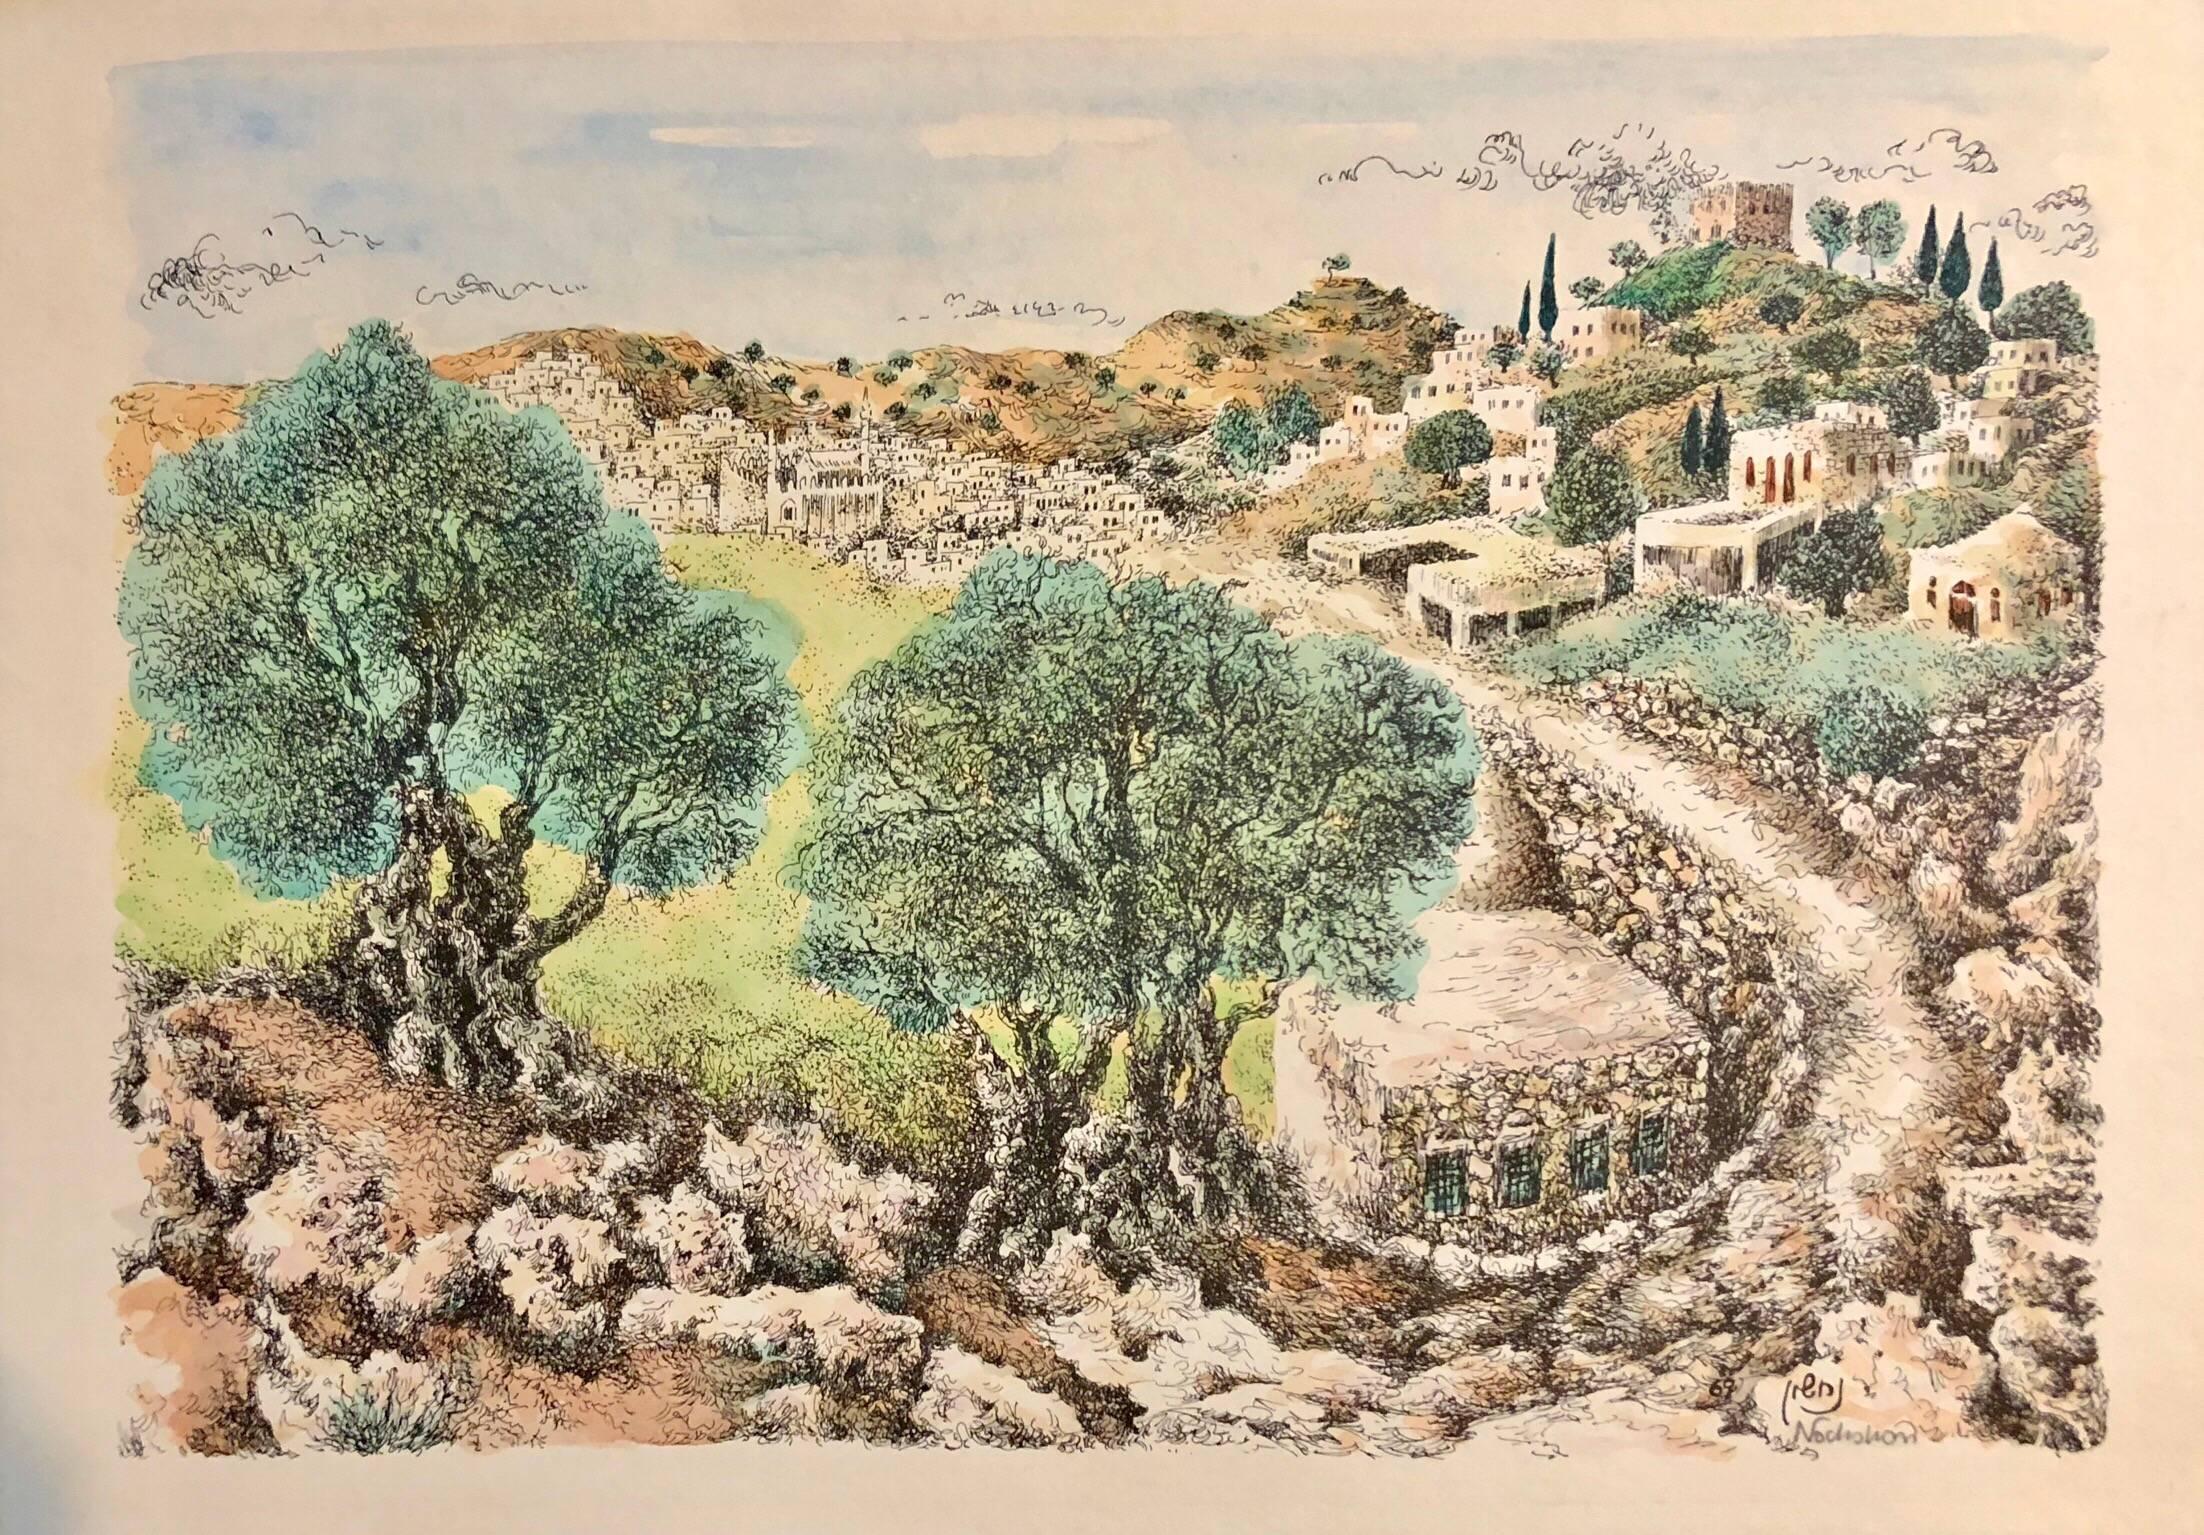 Baruch Nachshon Landscape Art - Hebron, 1967 Israeli Judaica Mixed Media Print Watercolor Painting